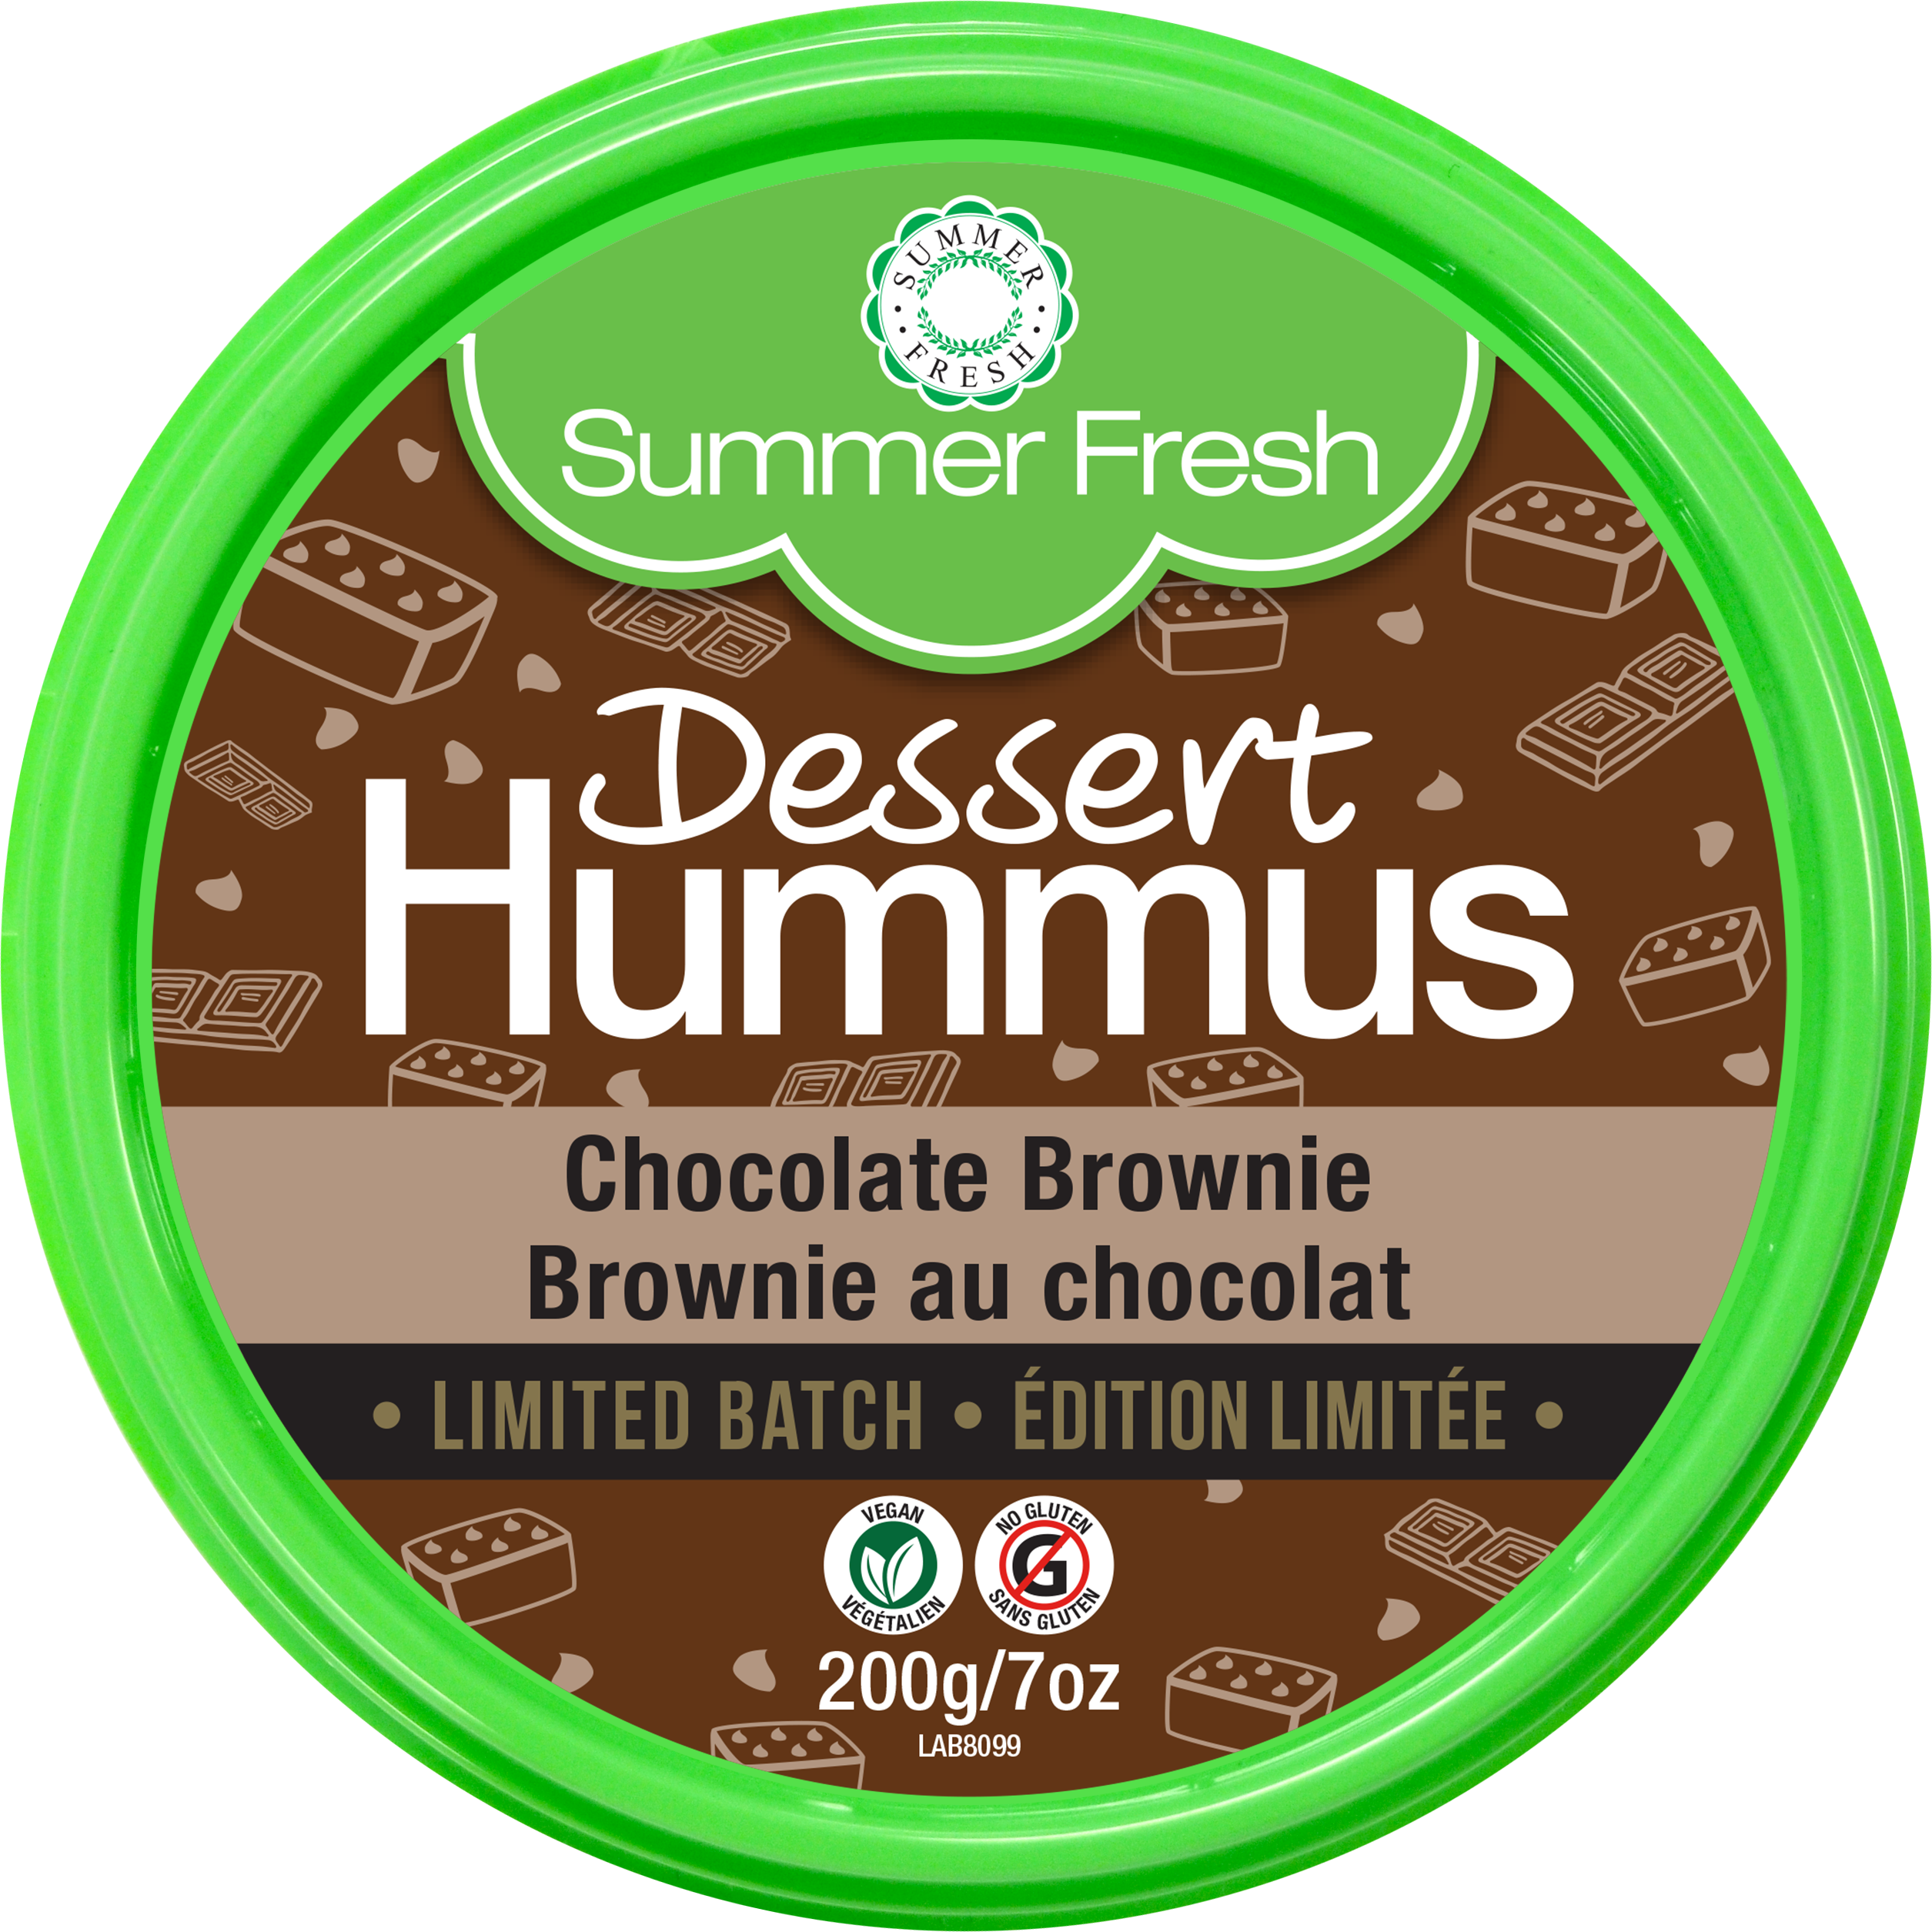 Chocolate Brownie Hummus